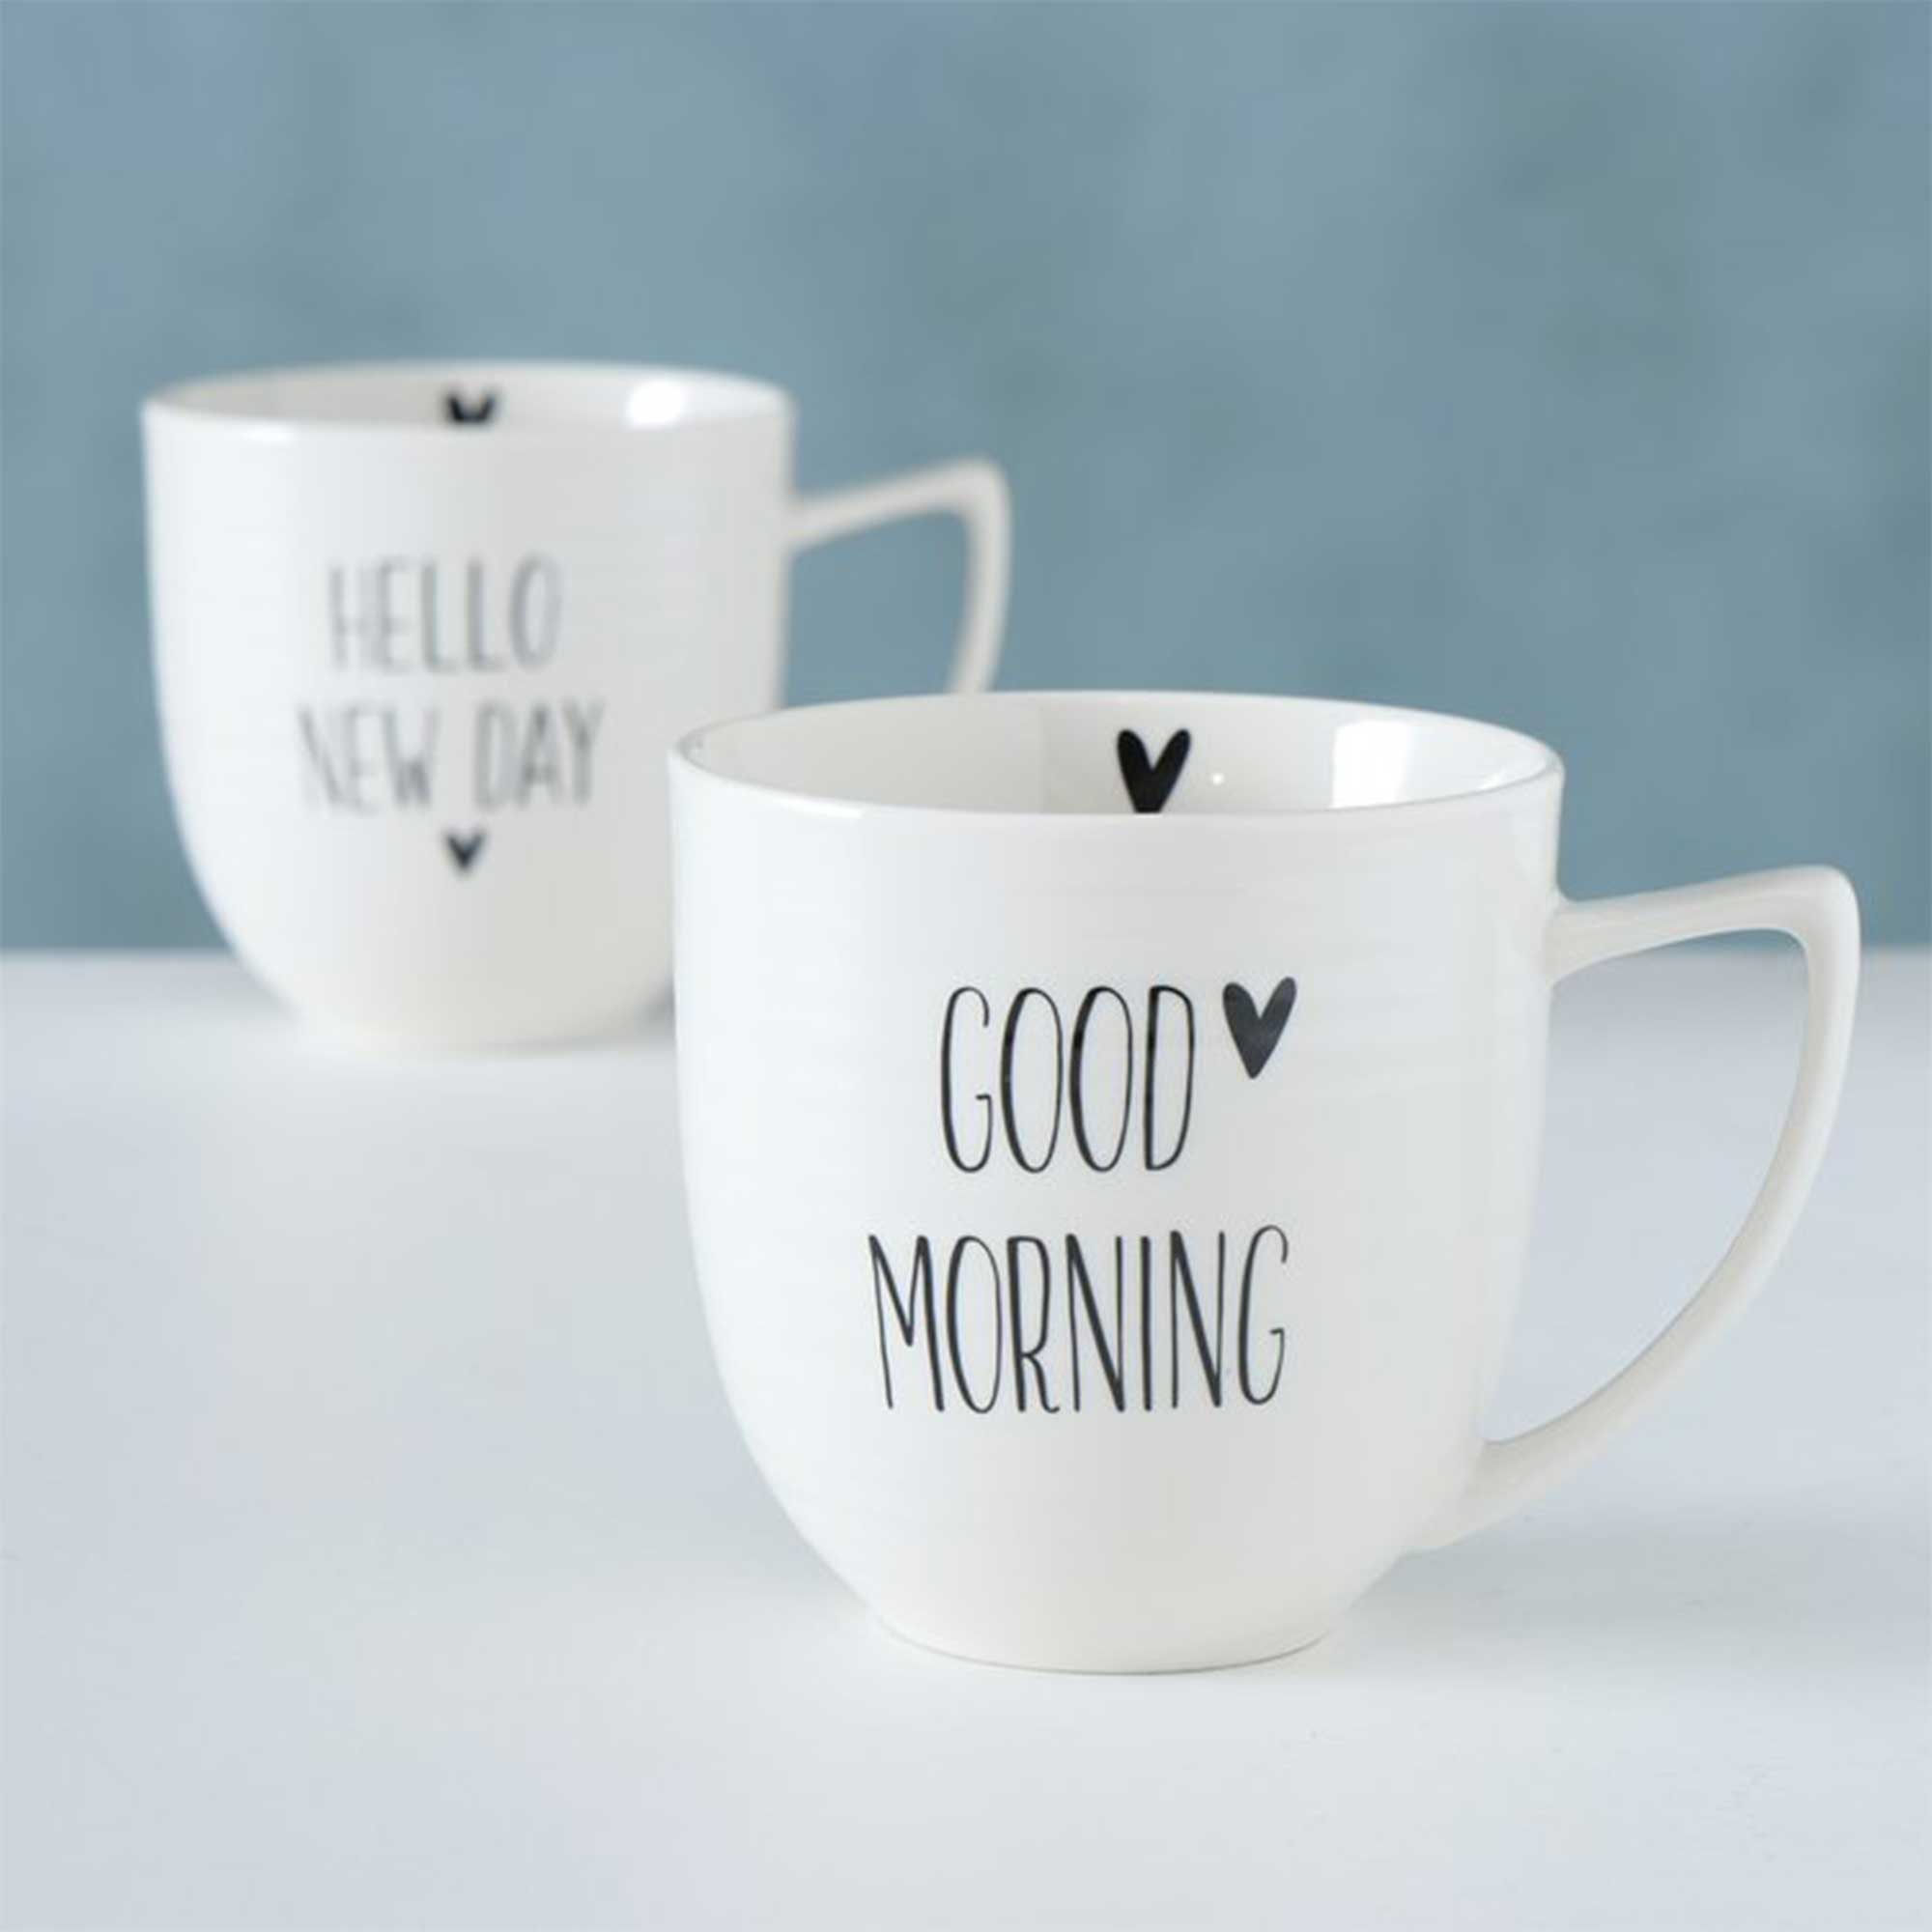 Morning mug set of 2